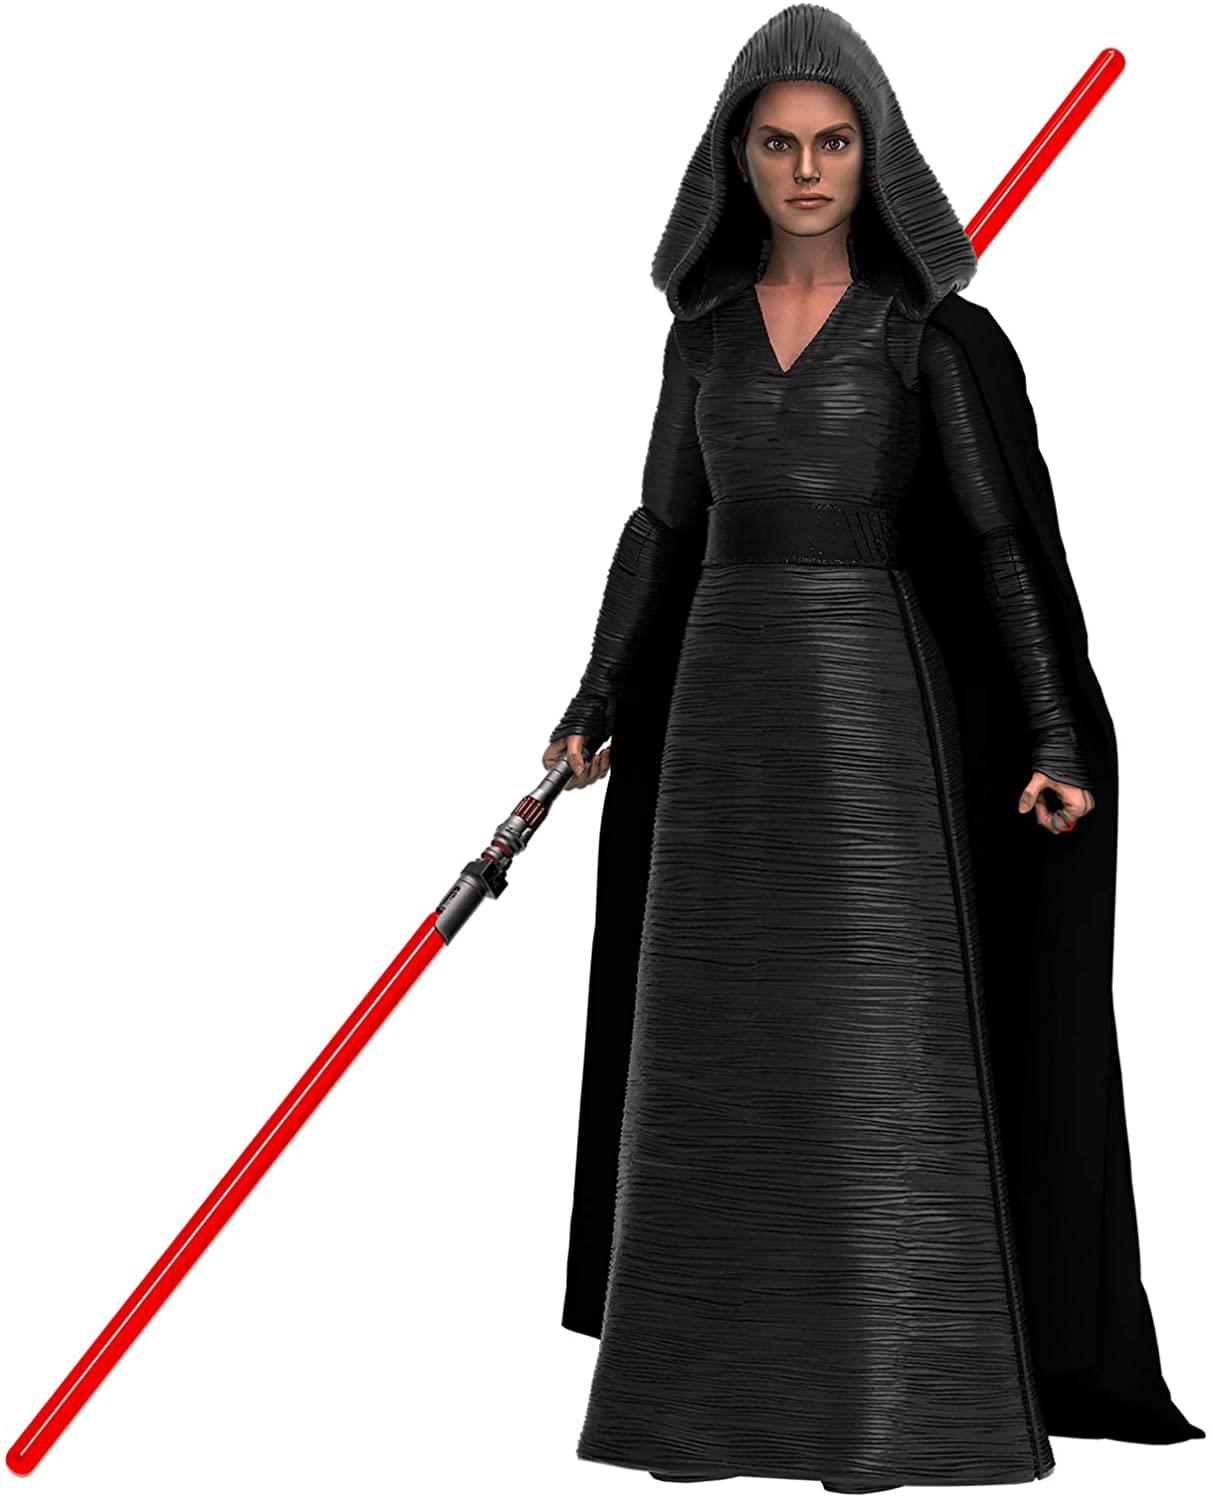 Star Wars Black Series 6 Inch Action Figure | Rey (Dark Side Vision)